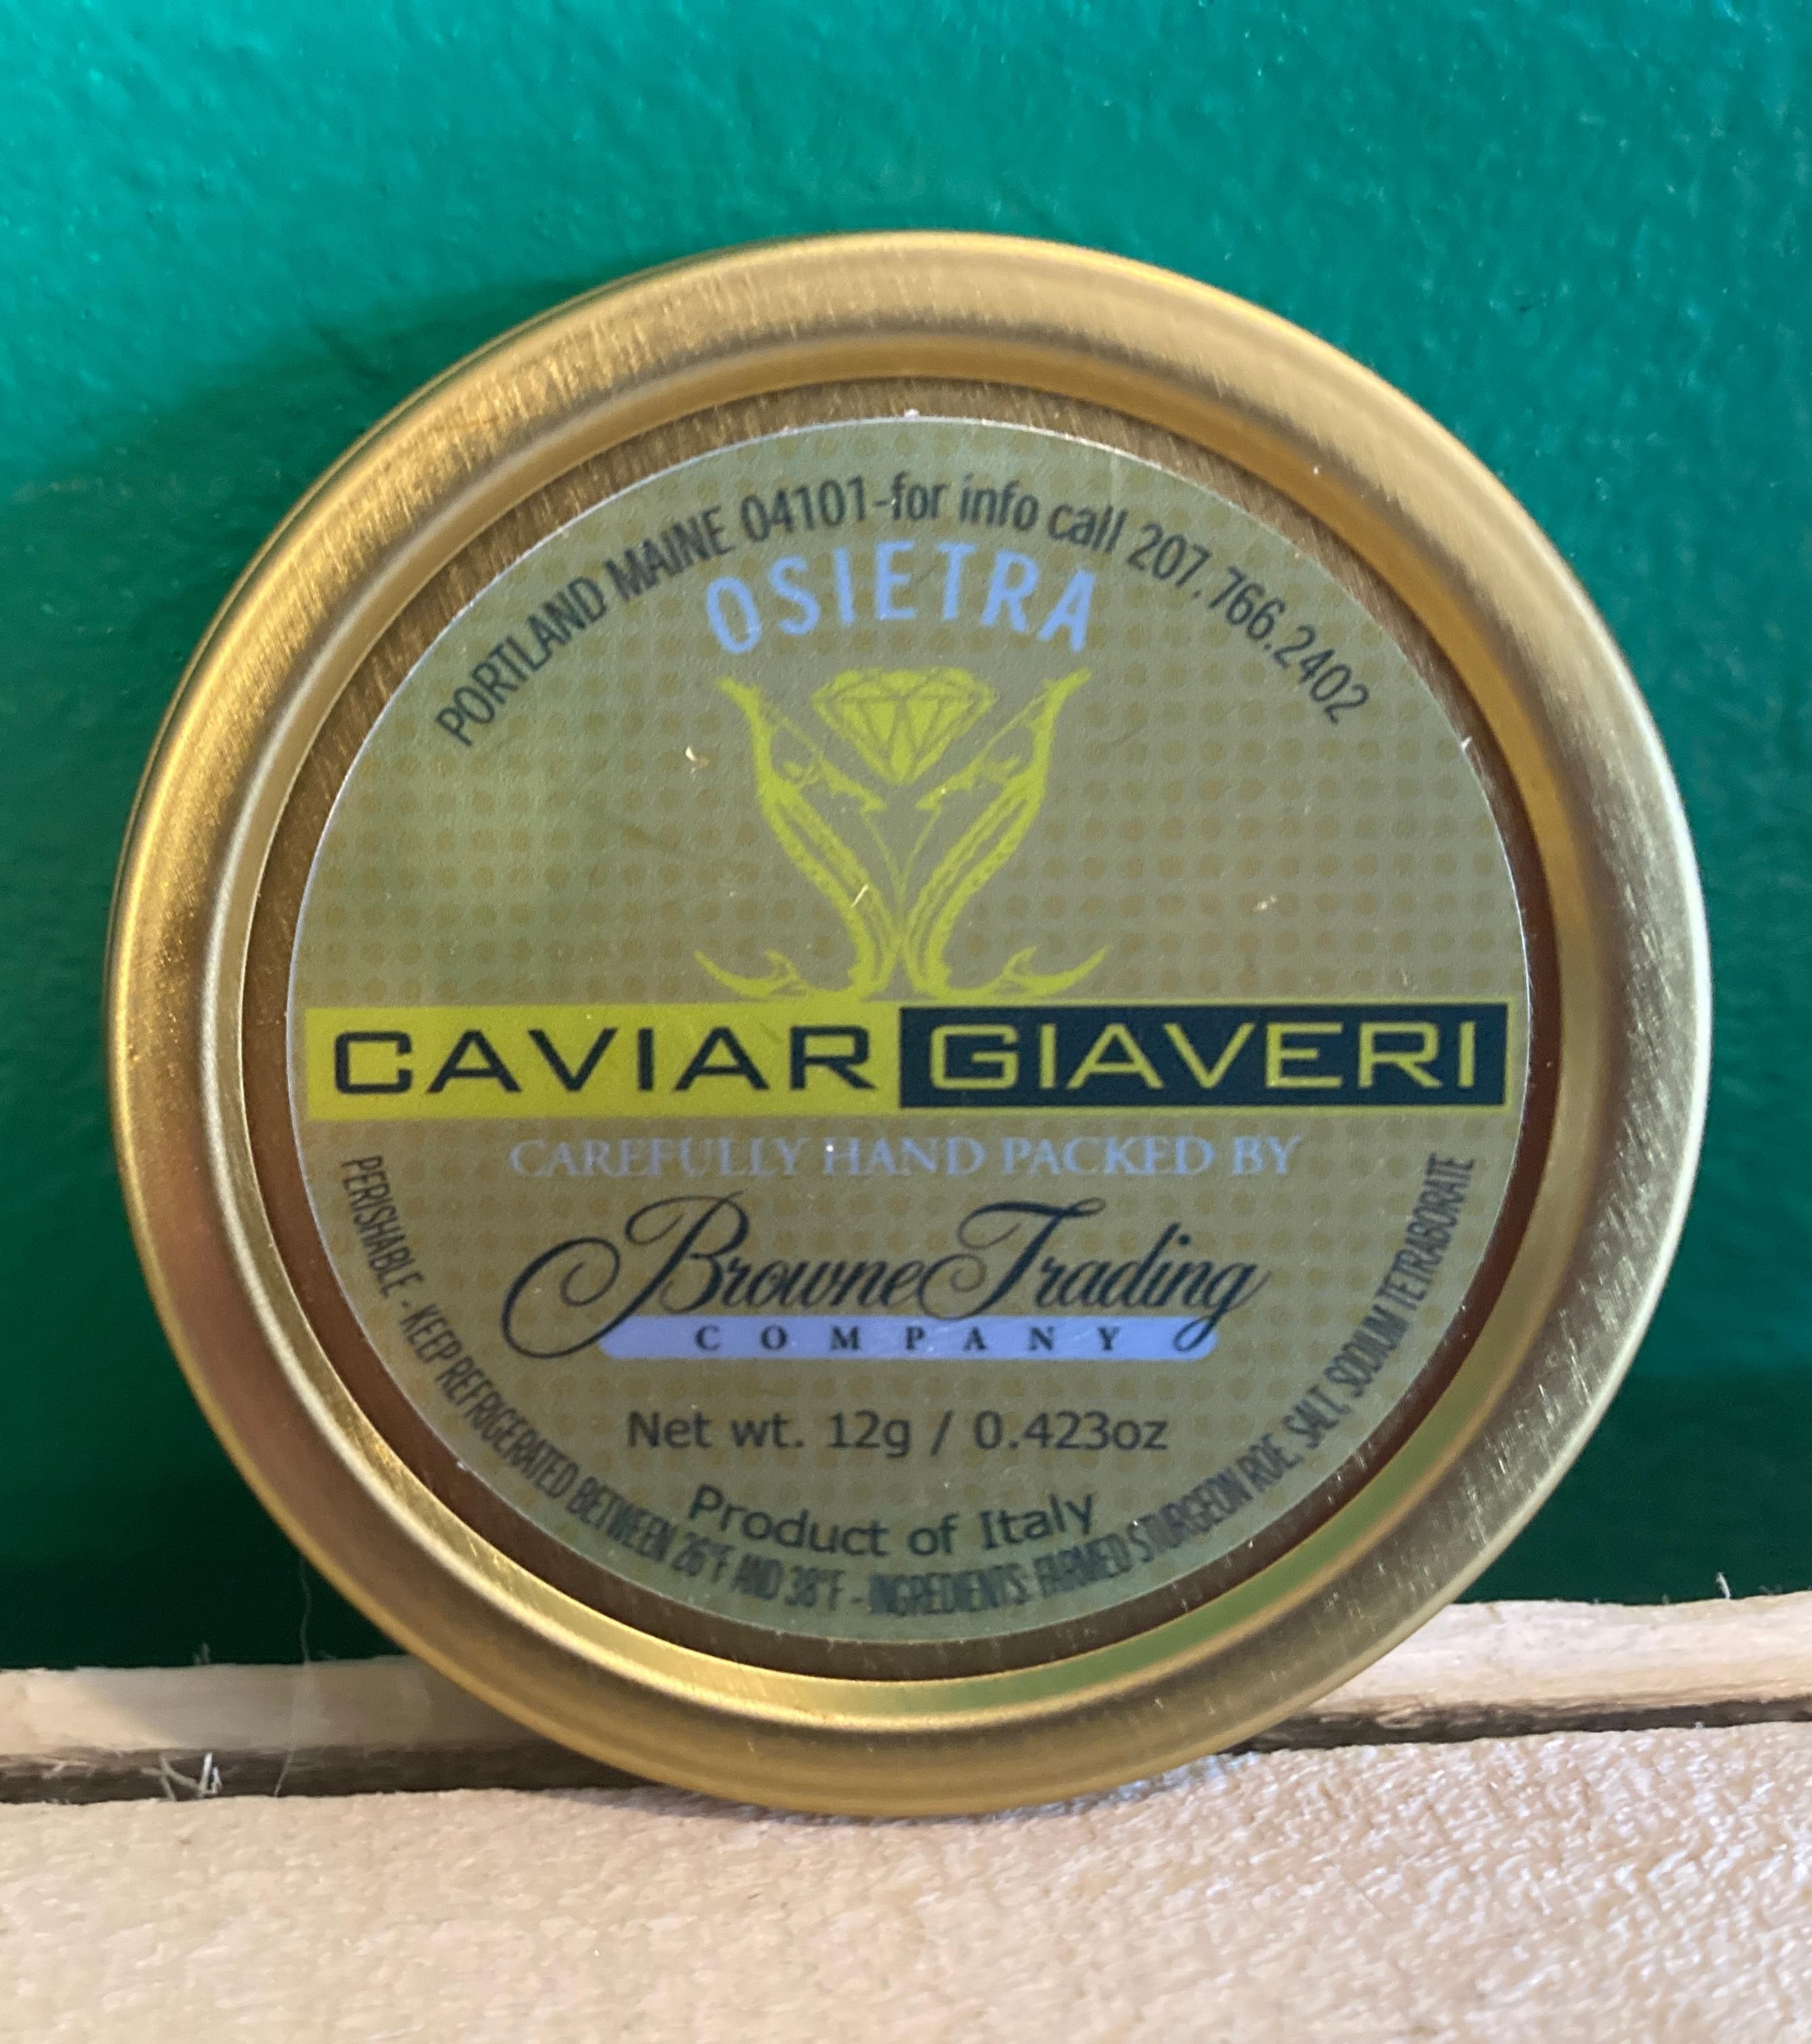 Caviar Giaveri Osietra 12g